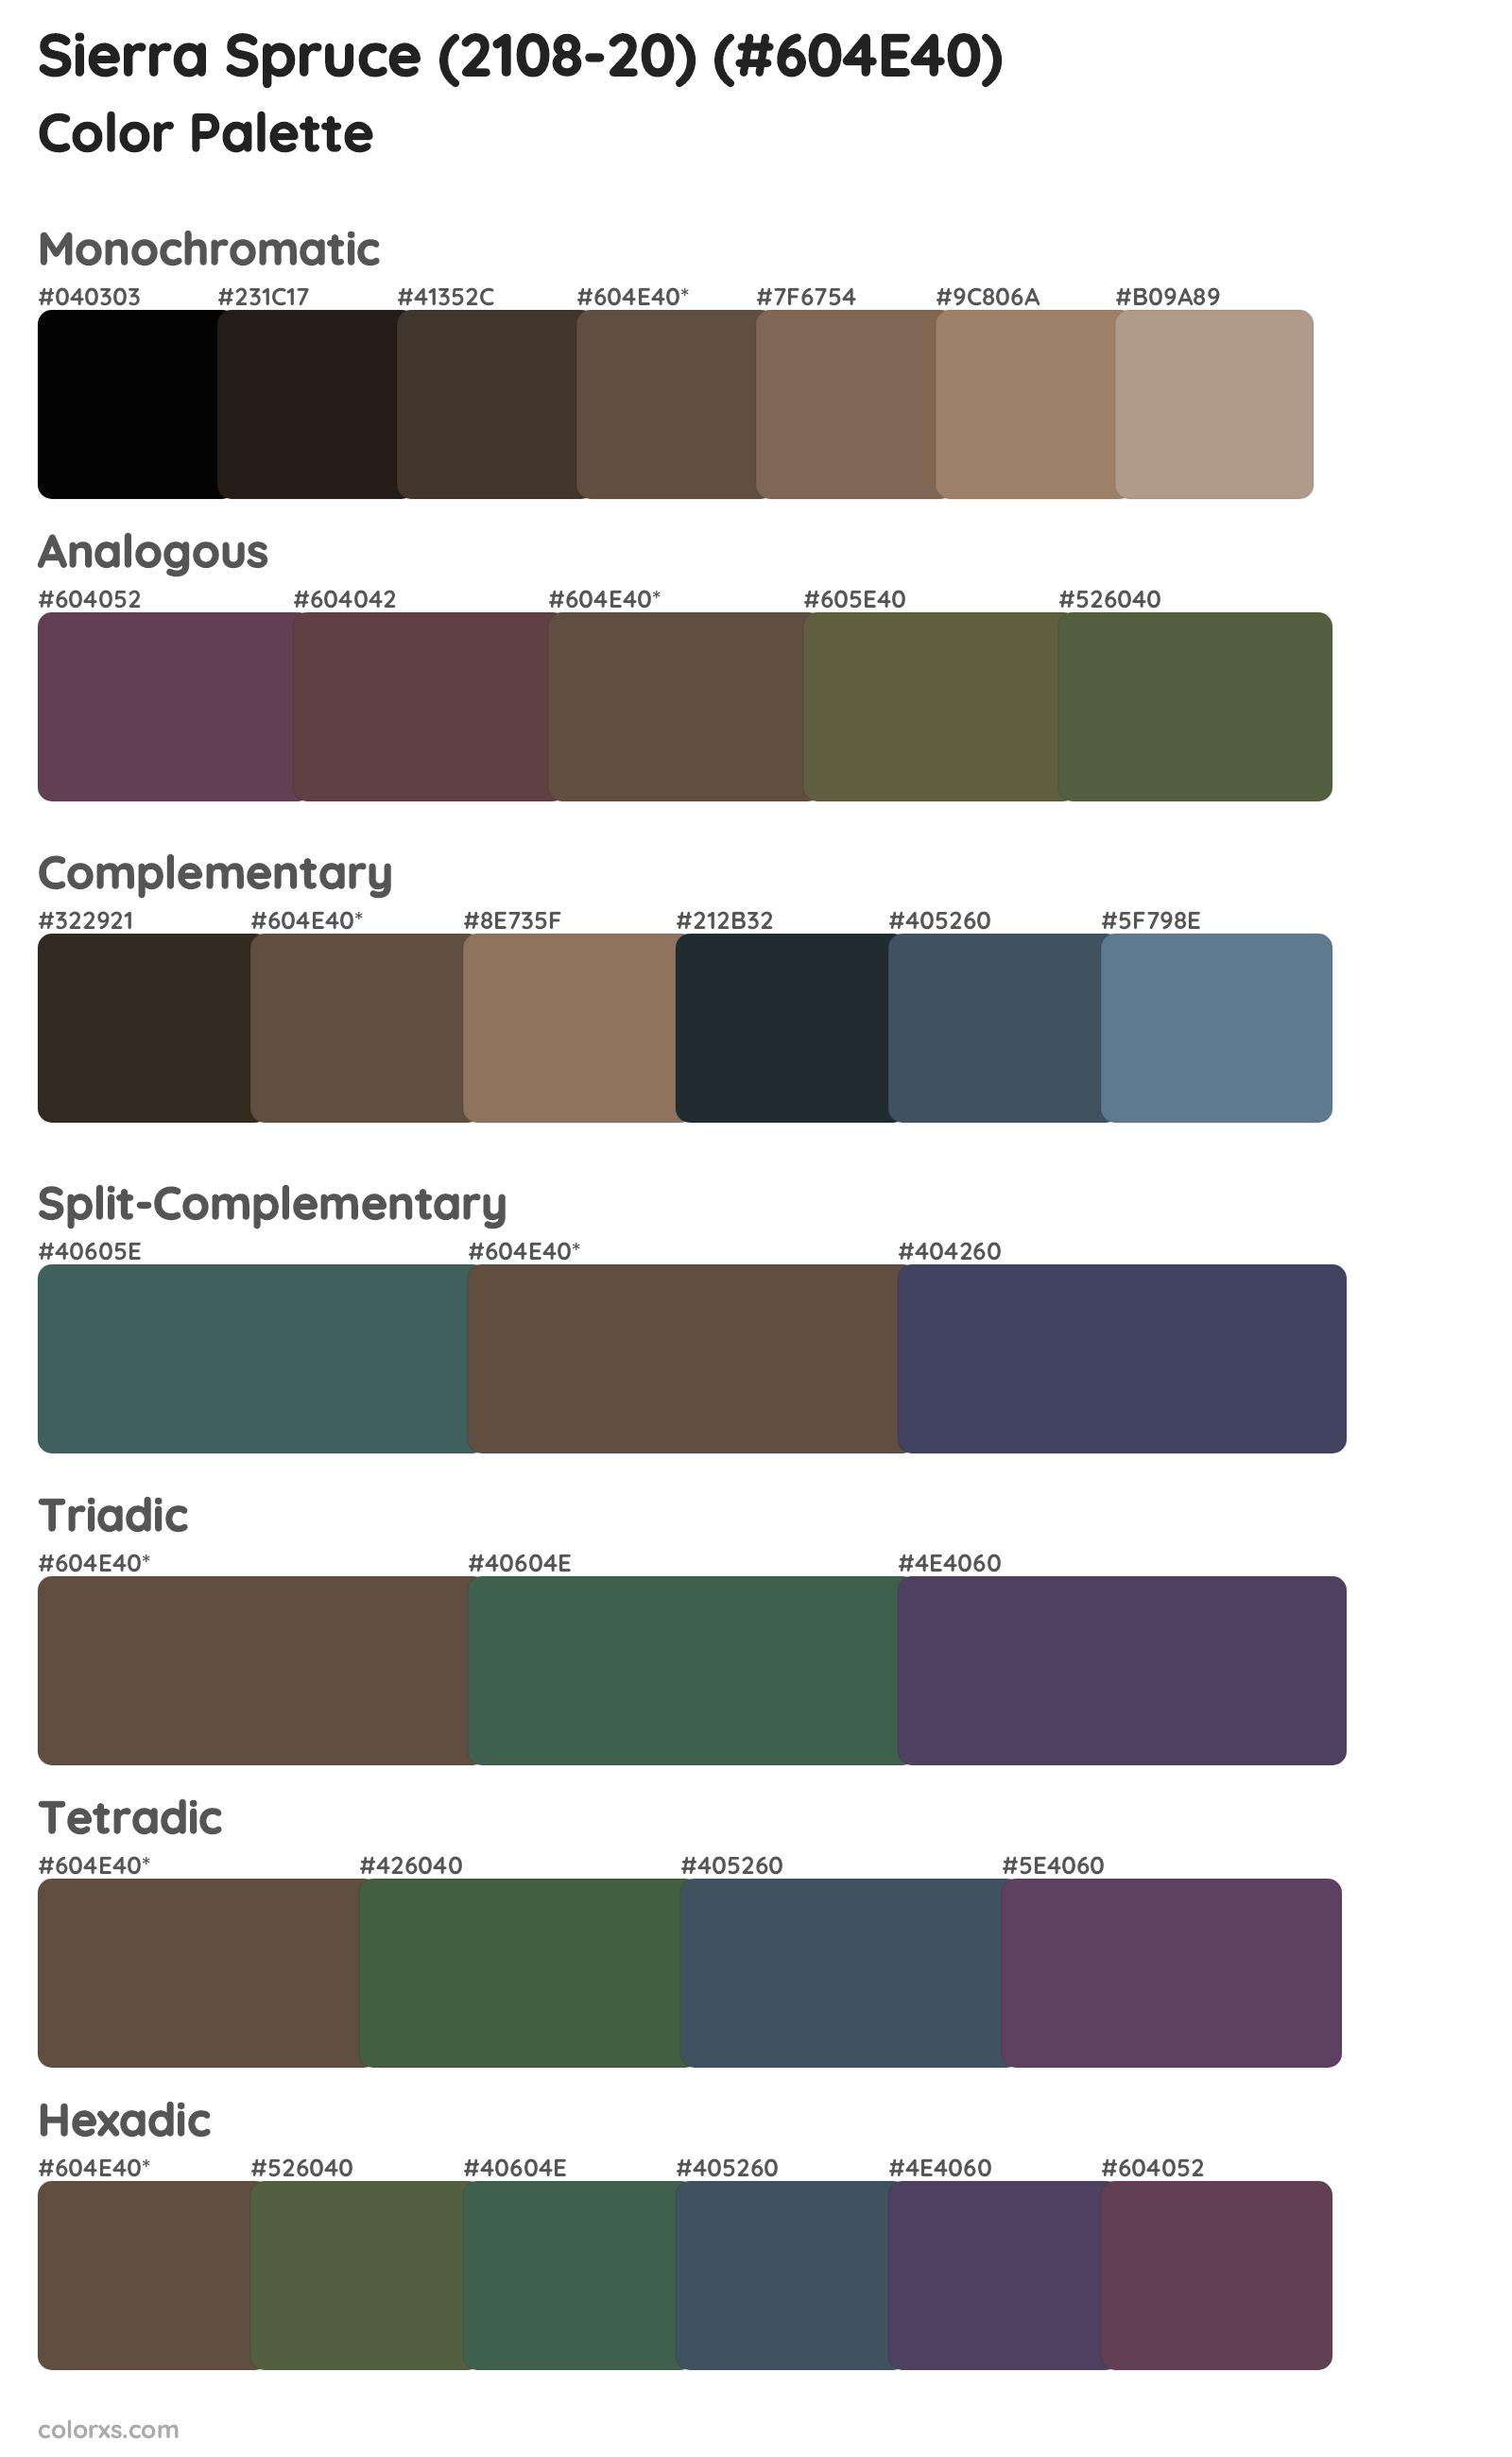 Sierra Spruce (2108-20) Color Scheme Palettes